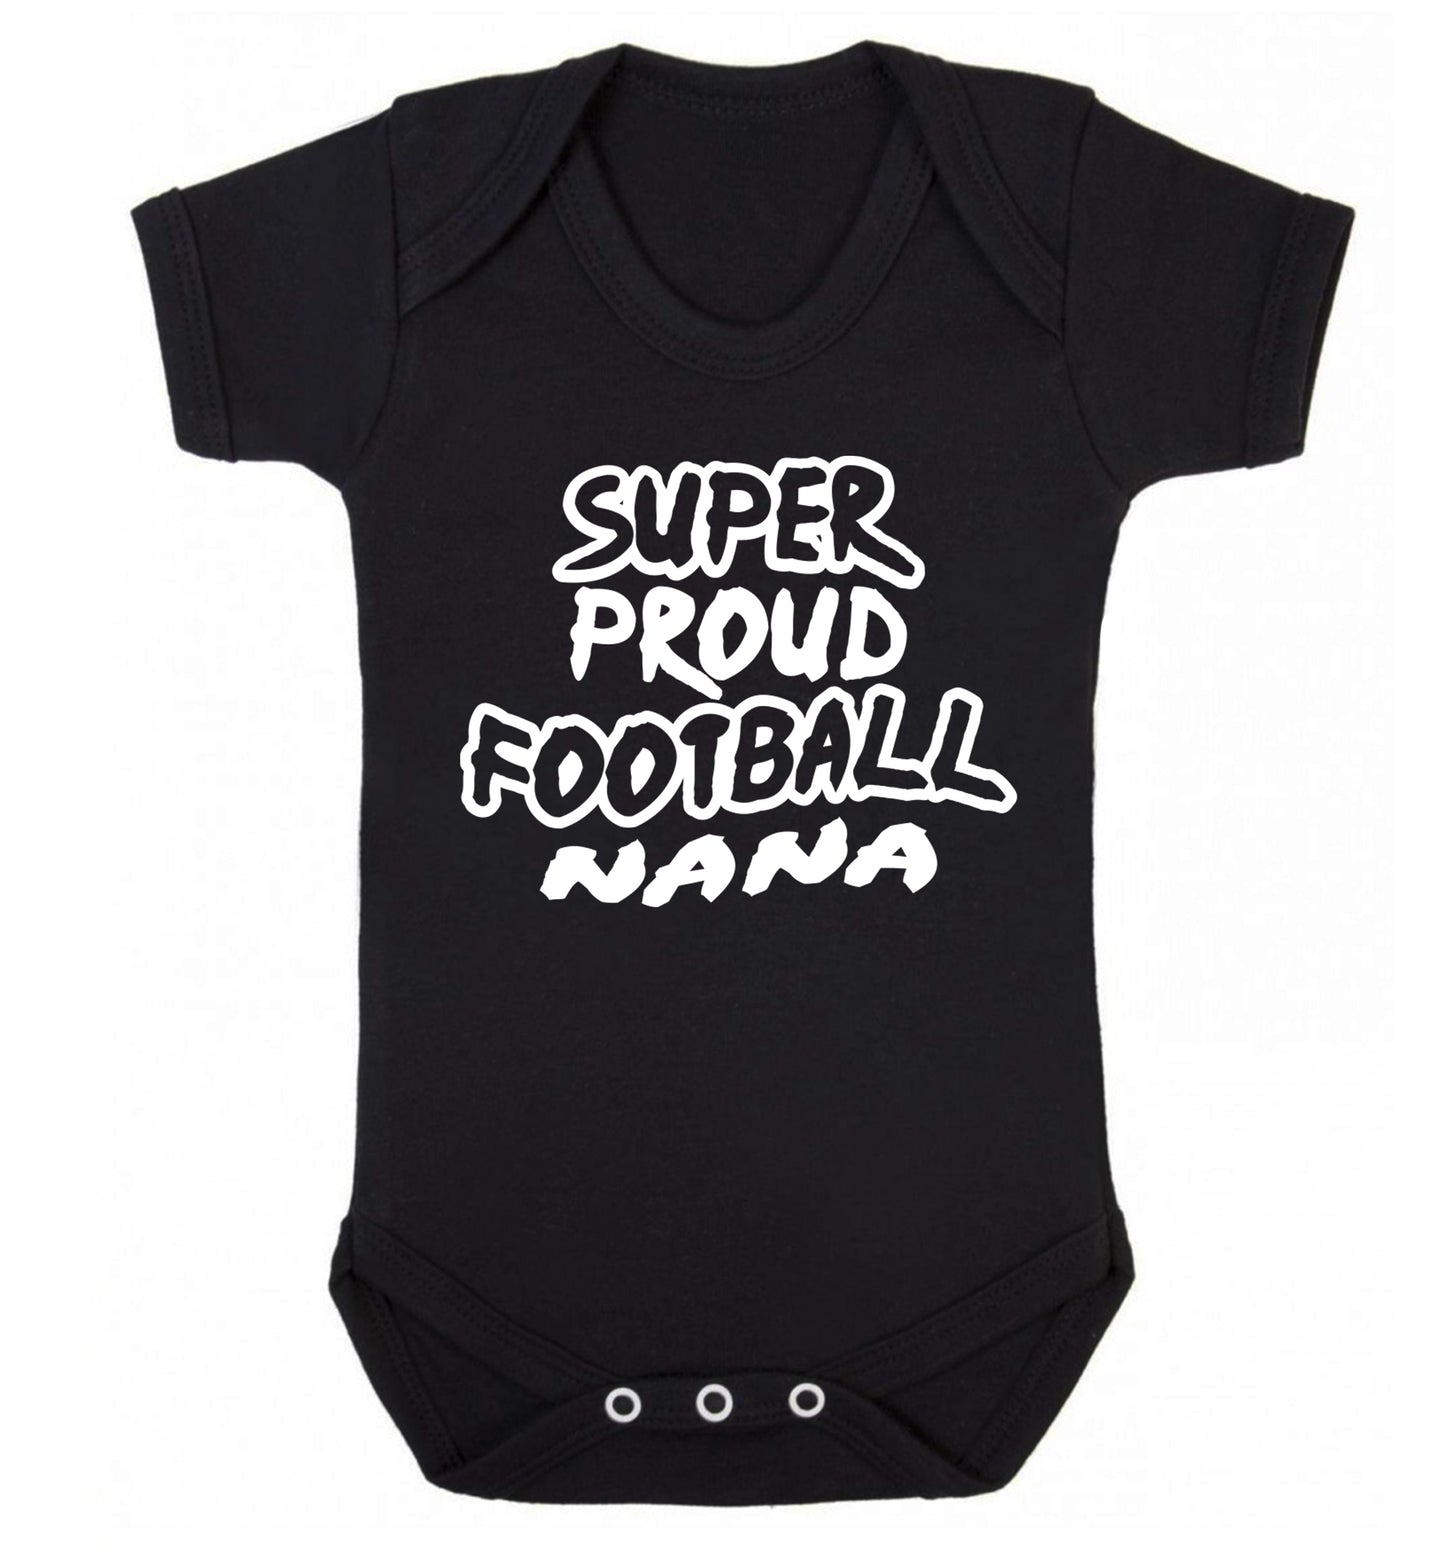 Super proud football nana Baby Vest black 18-24 months